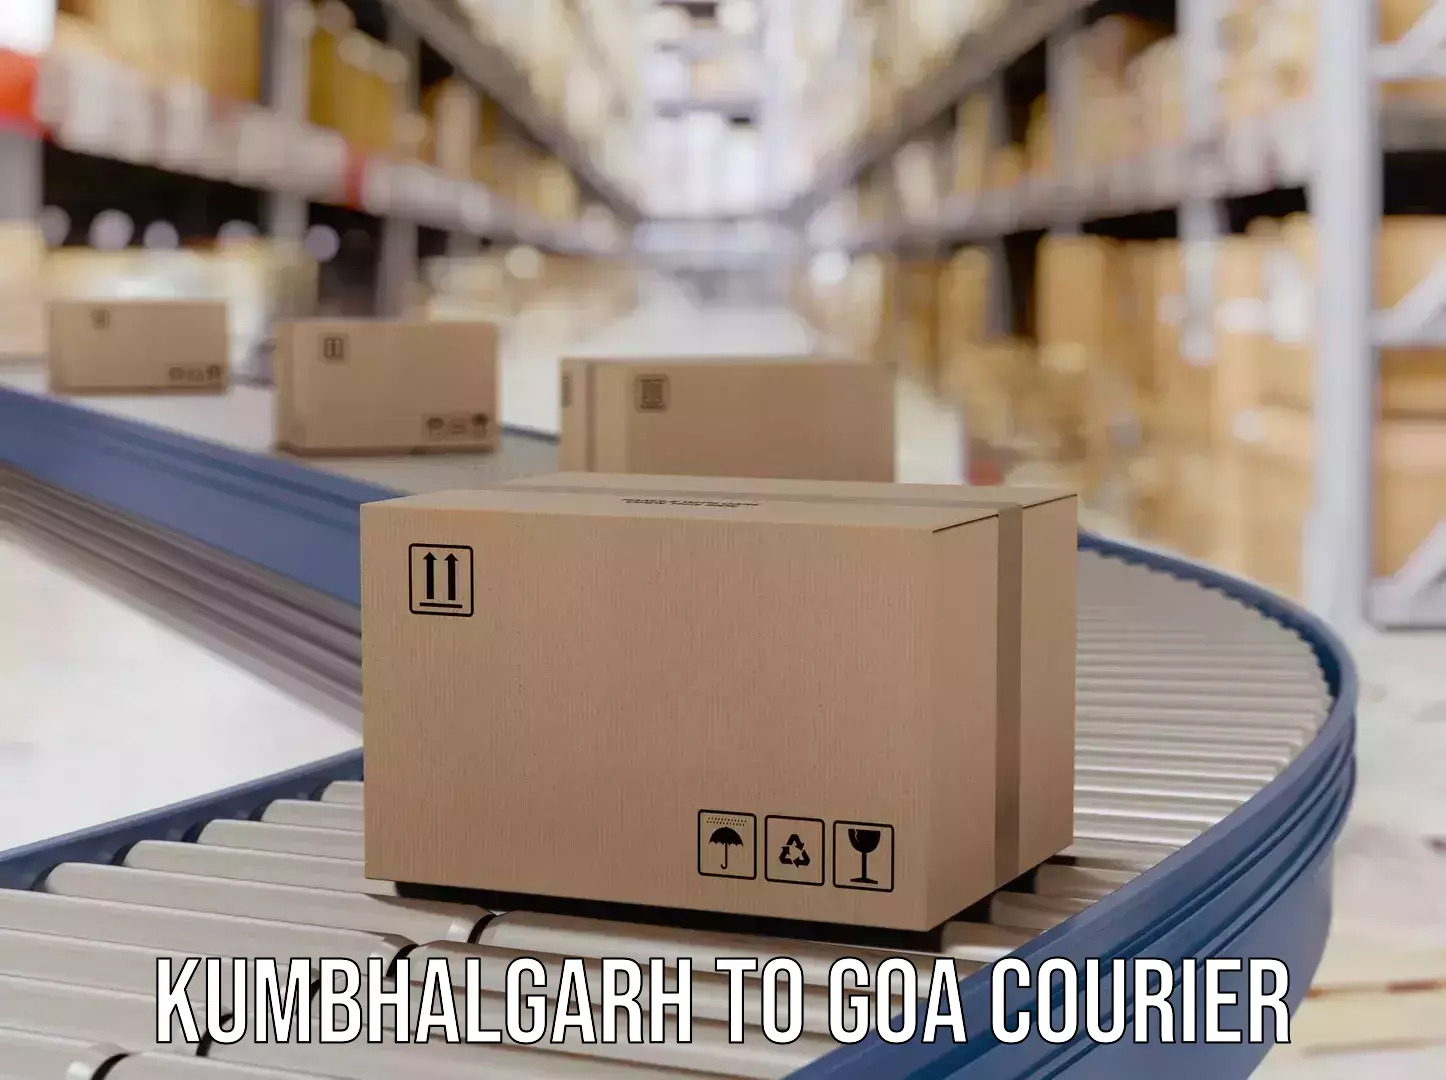 Courier service comparison Kumbhalgarh to Margao